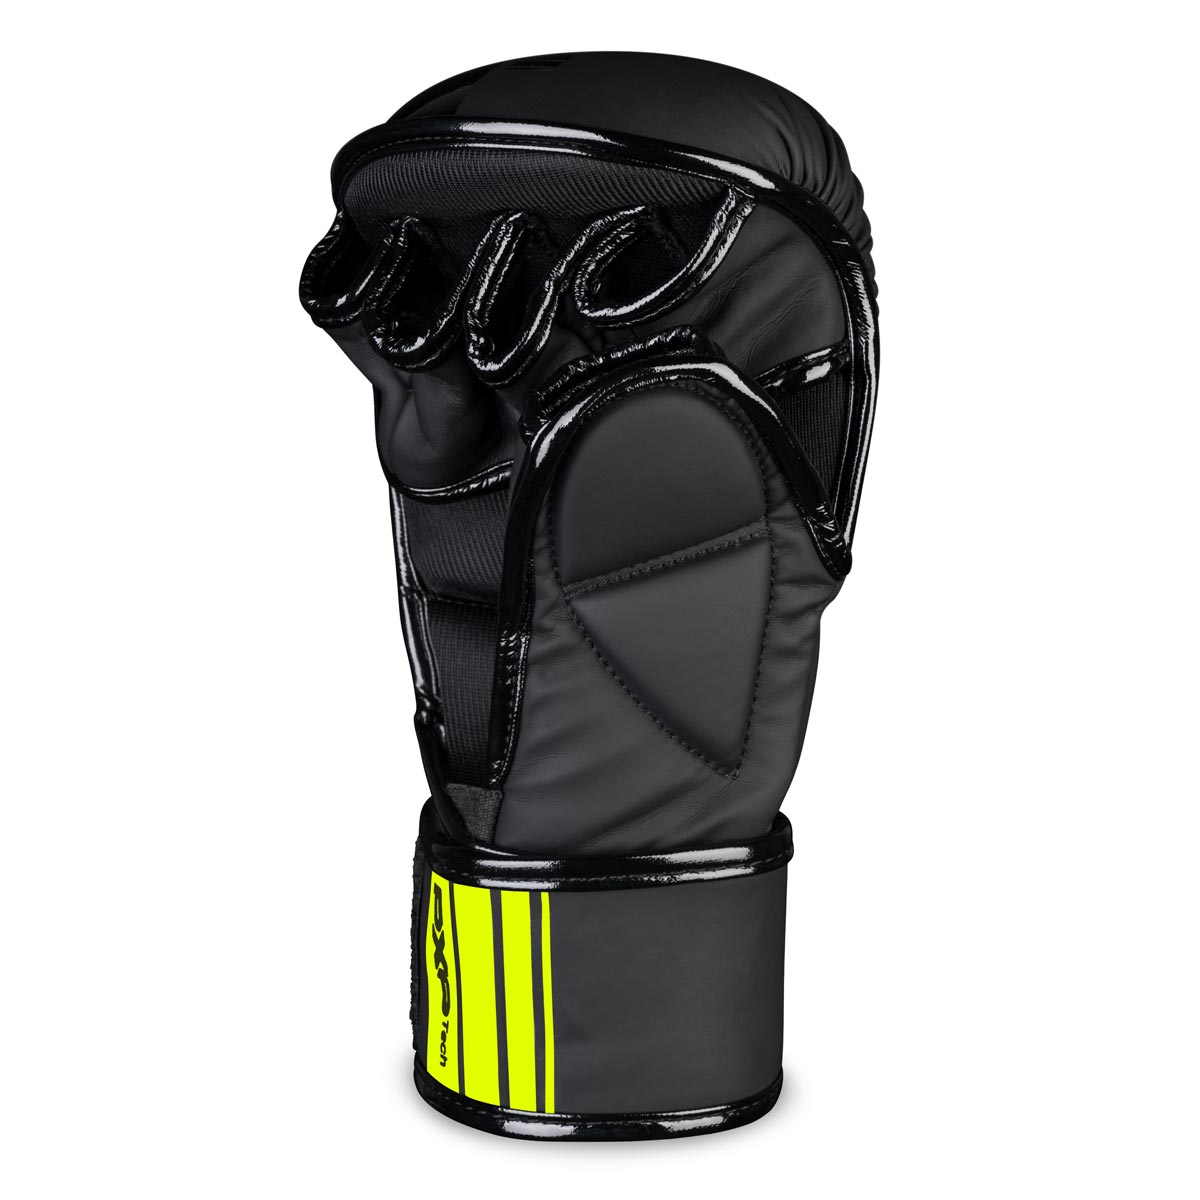 Die Phantom Apex MMA Sparringshandschuhe - Rechter Handschuh mit extra Daumenpolsterung